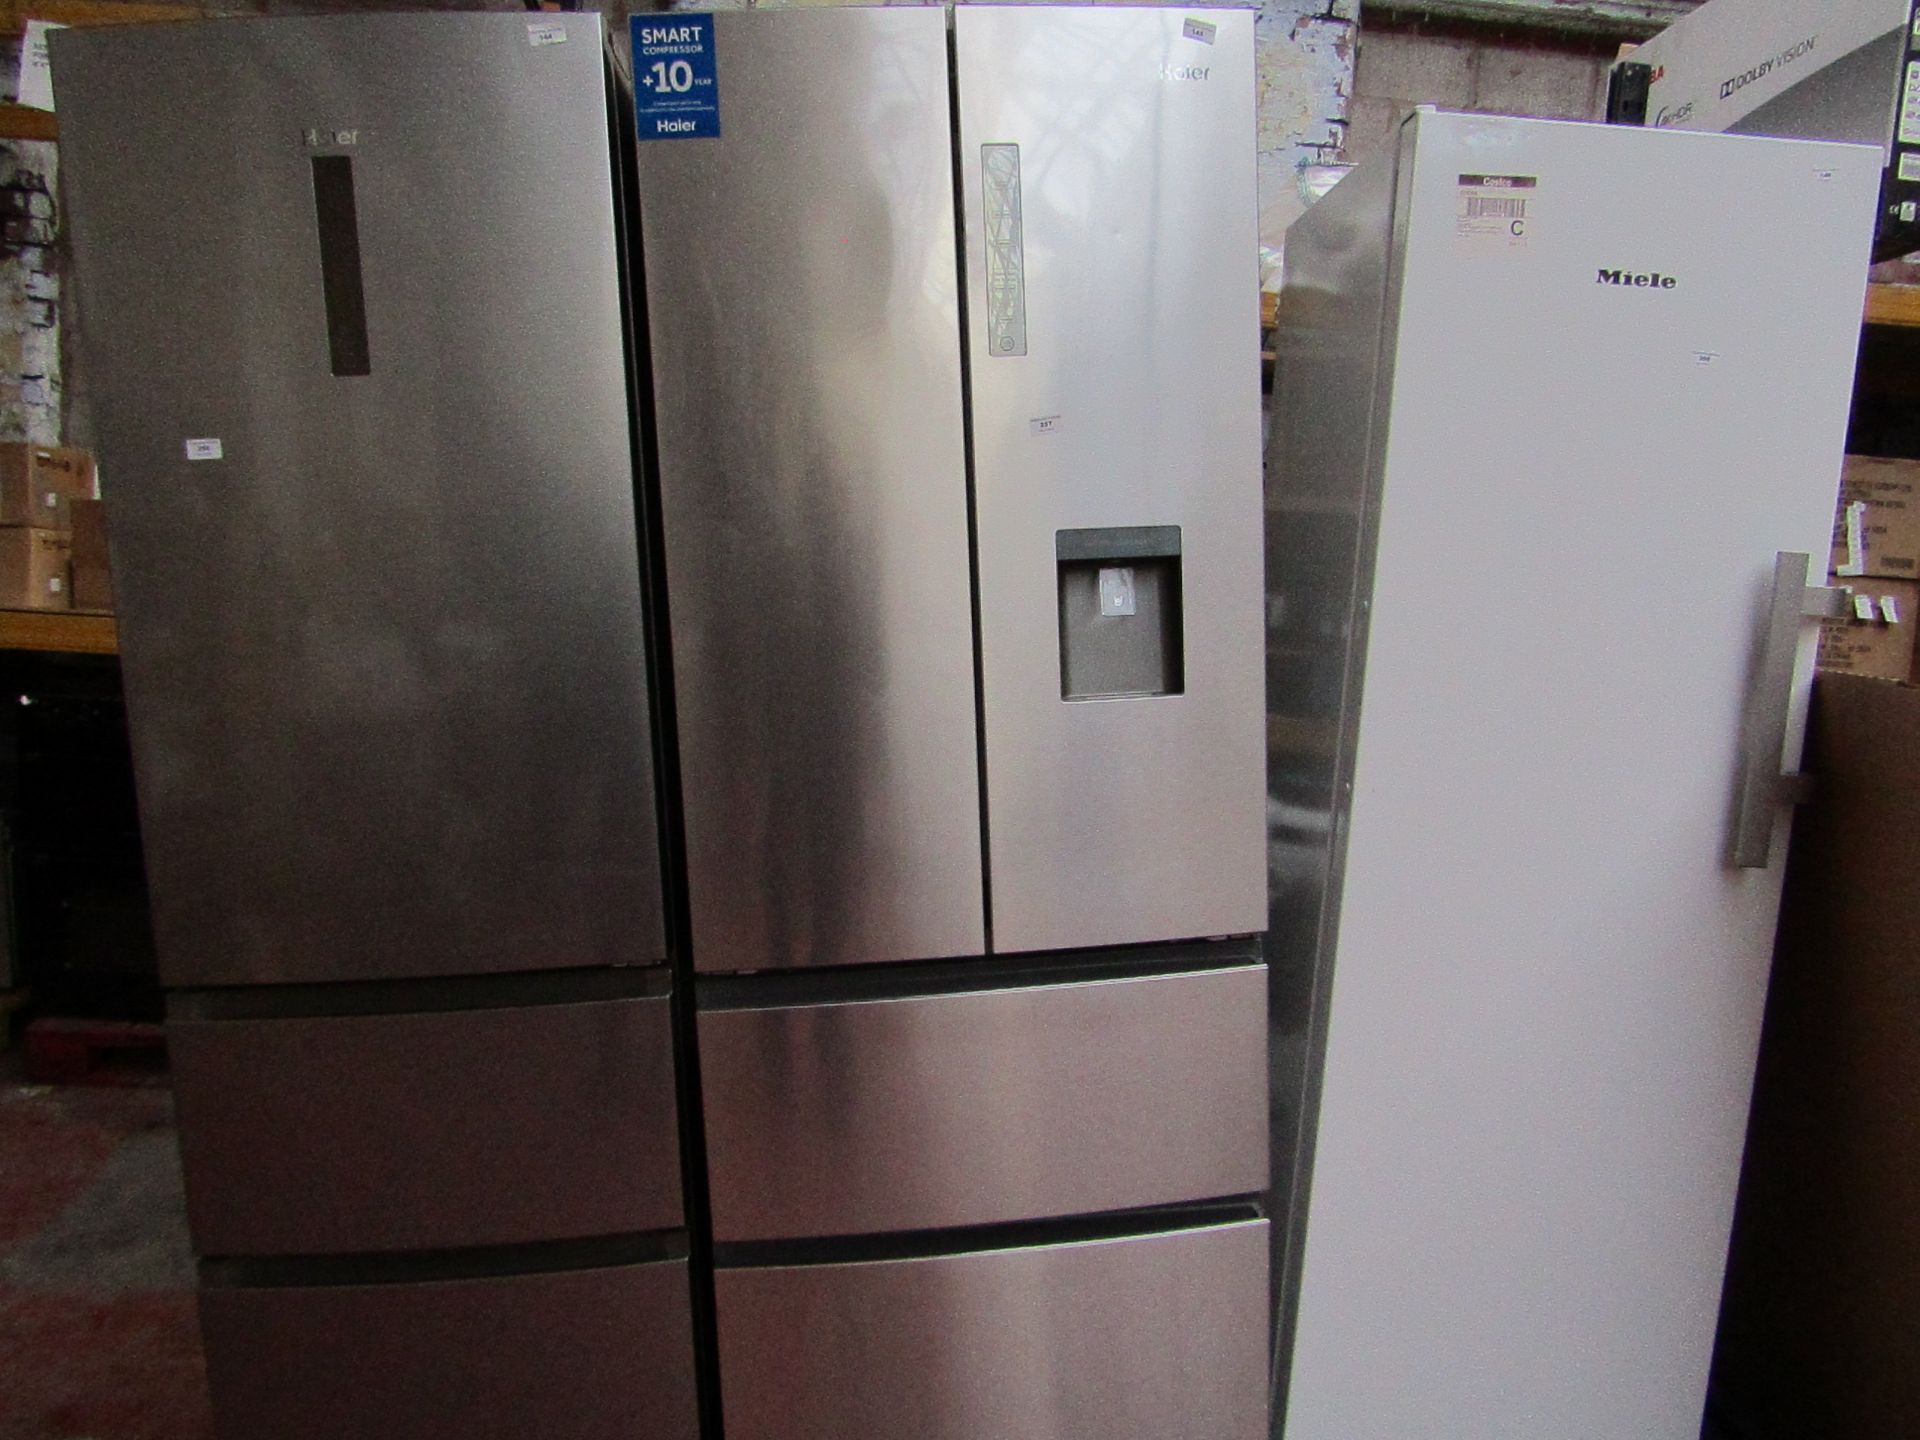 Haier double door fridge Freezer with water dispenser, tested working (except the water dispenser)